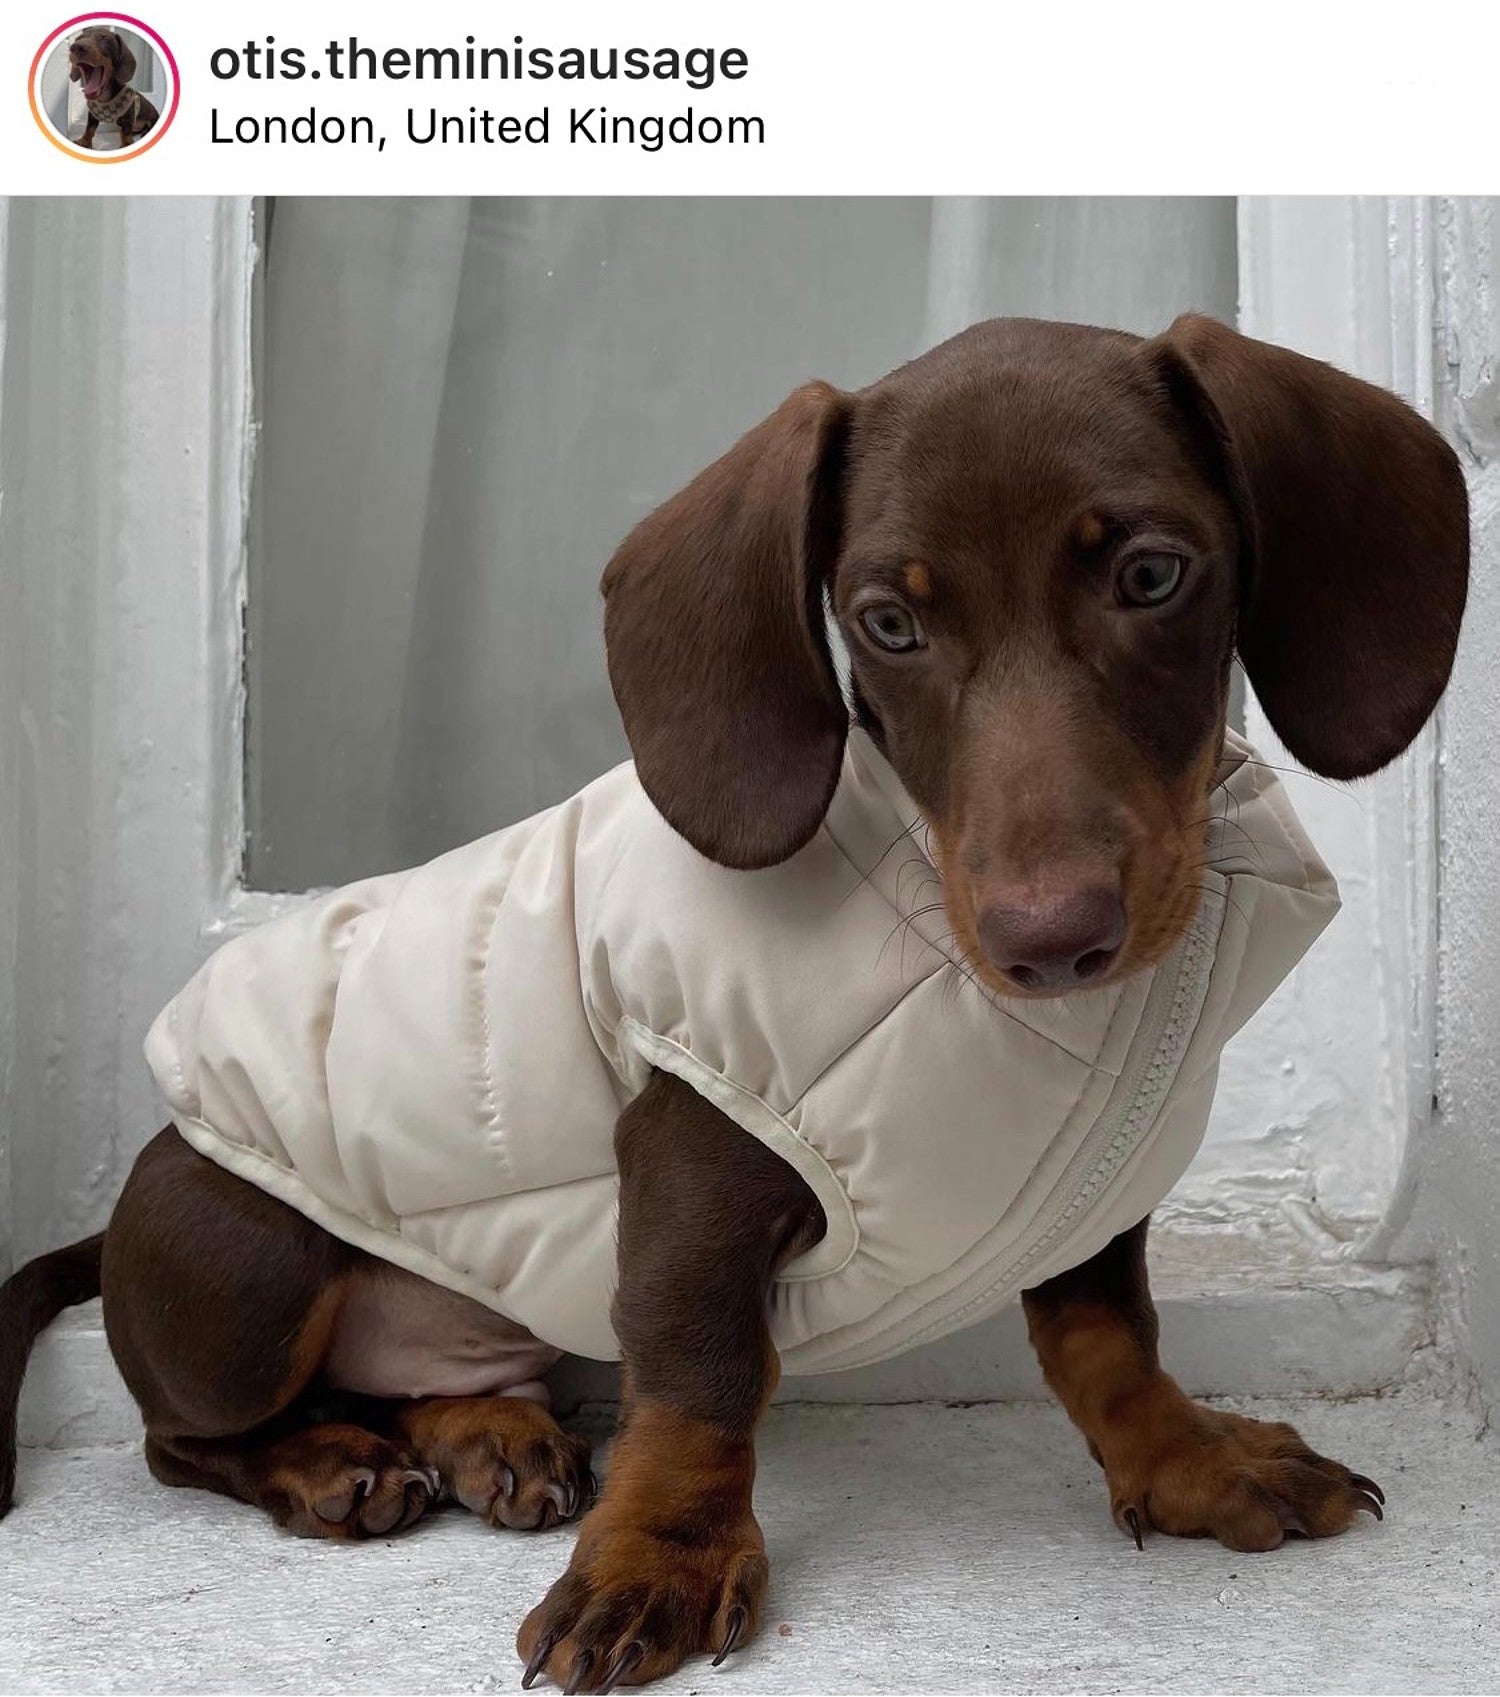 Dachshund Jacket worn by Otis the Miniature Dachshund (via Instagram)